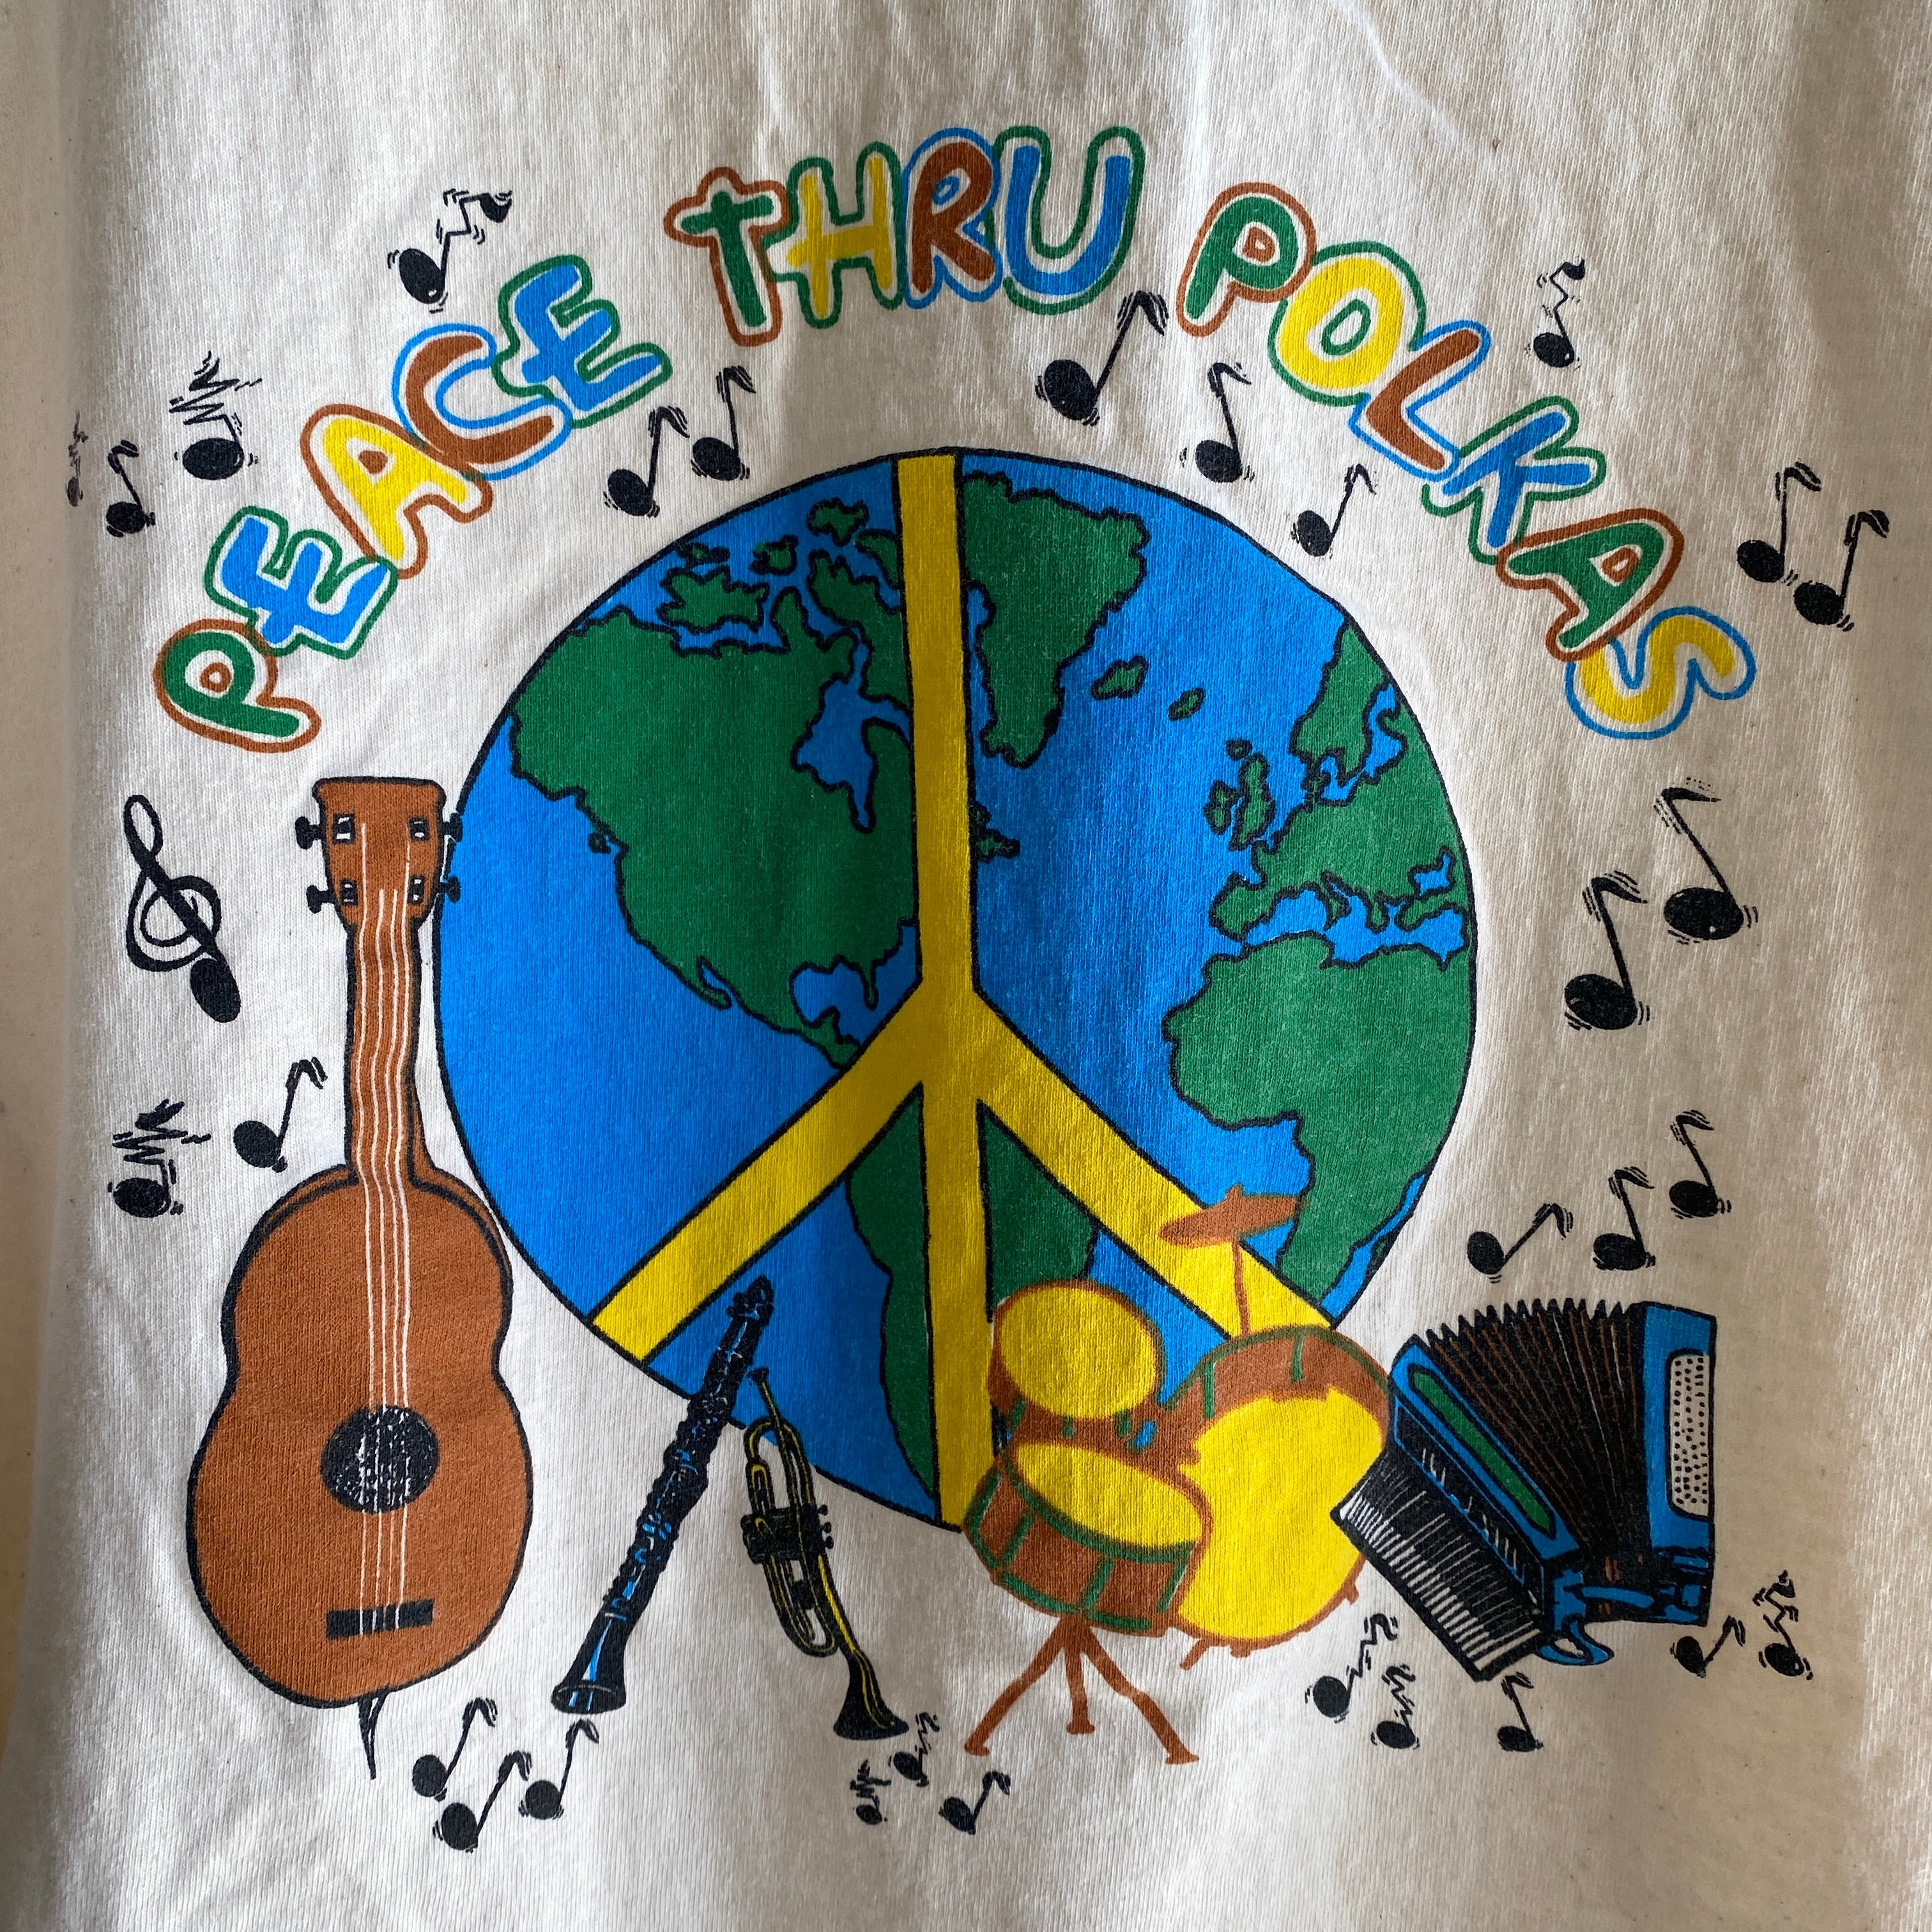 PAIX, AMOUR, POLKA des années 1980 - T-shirt Be a Polka Rascal par Anvil - WOWZA!